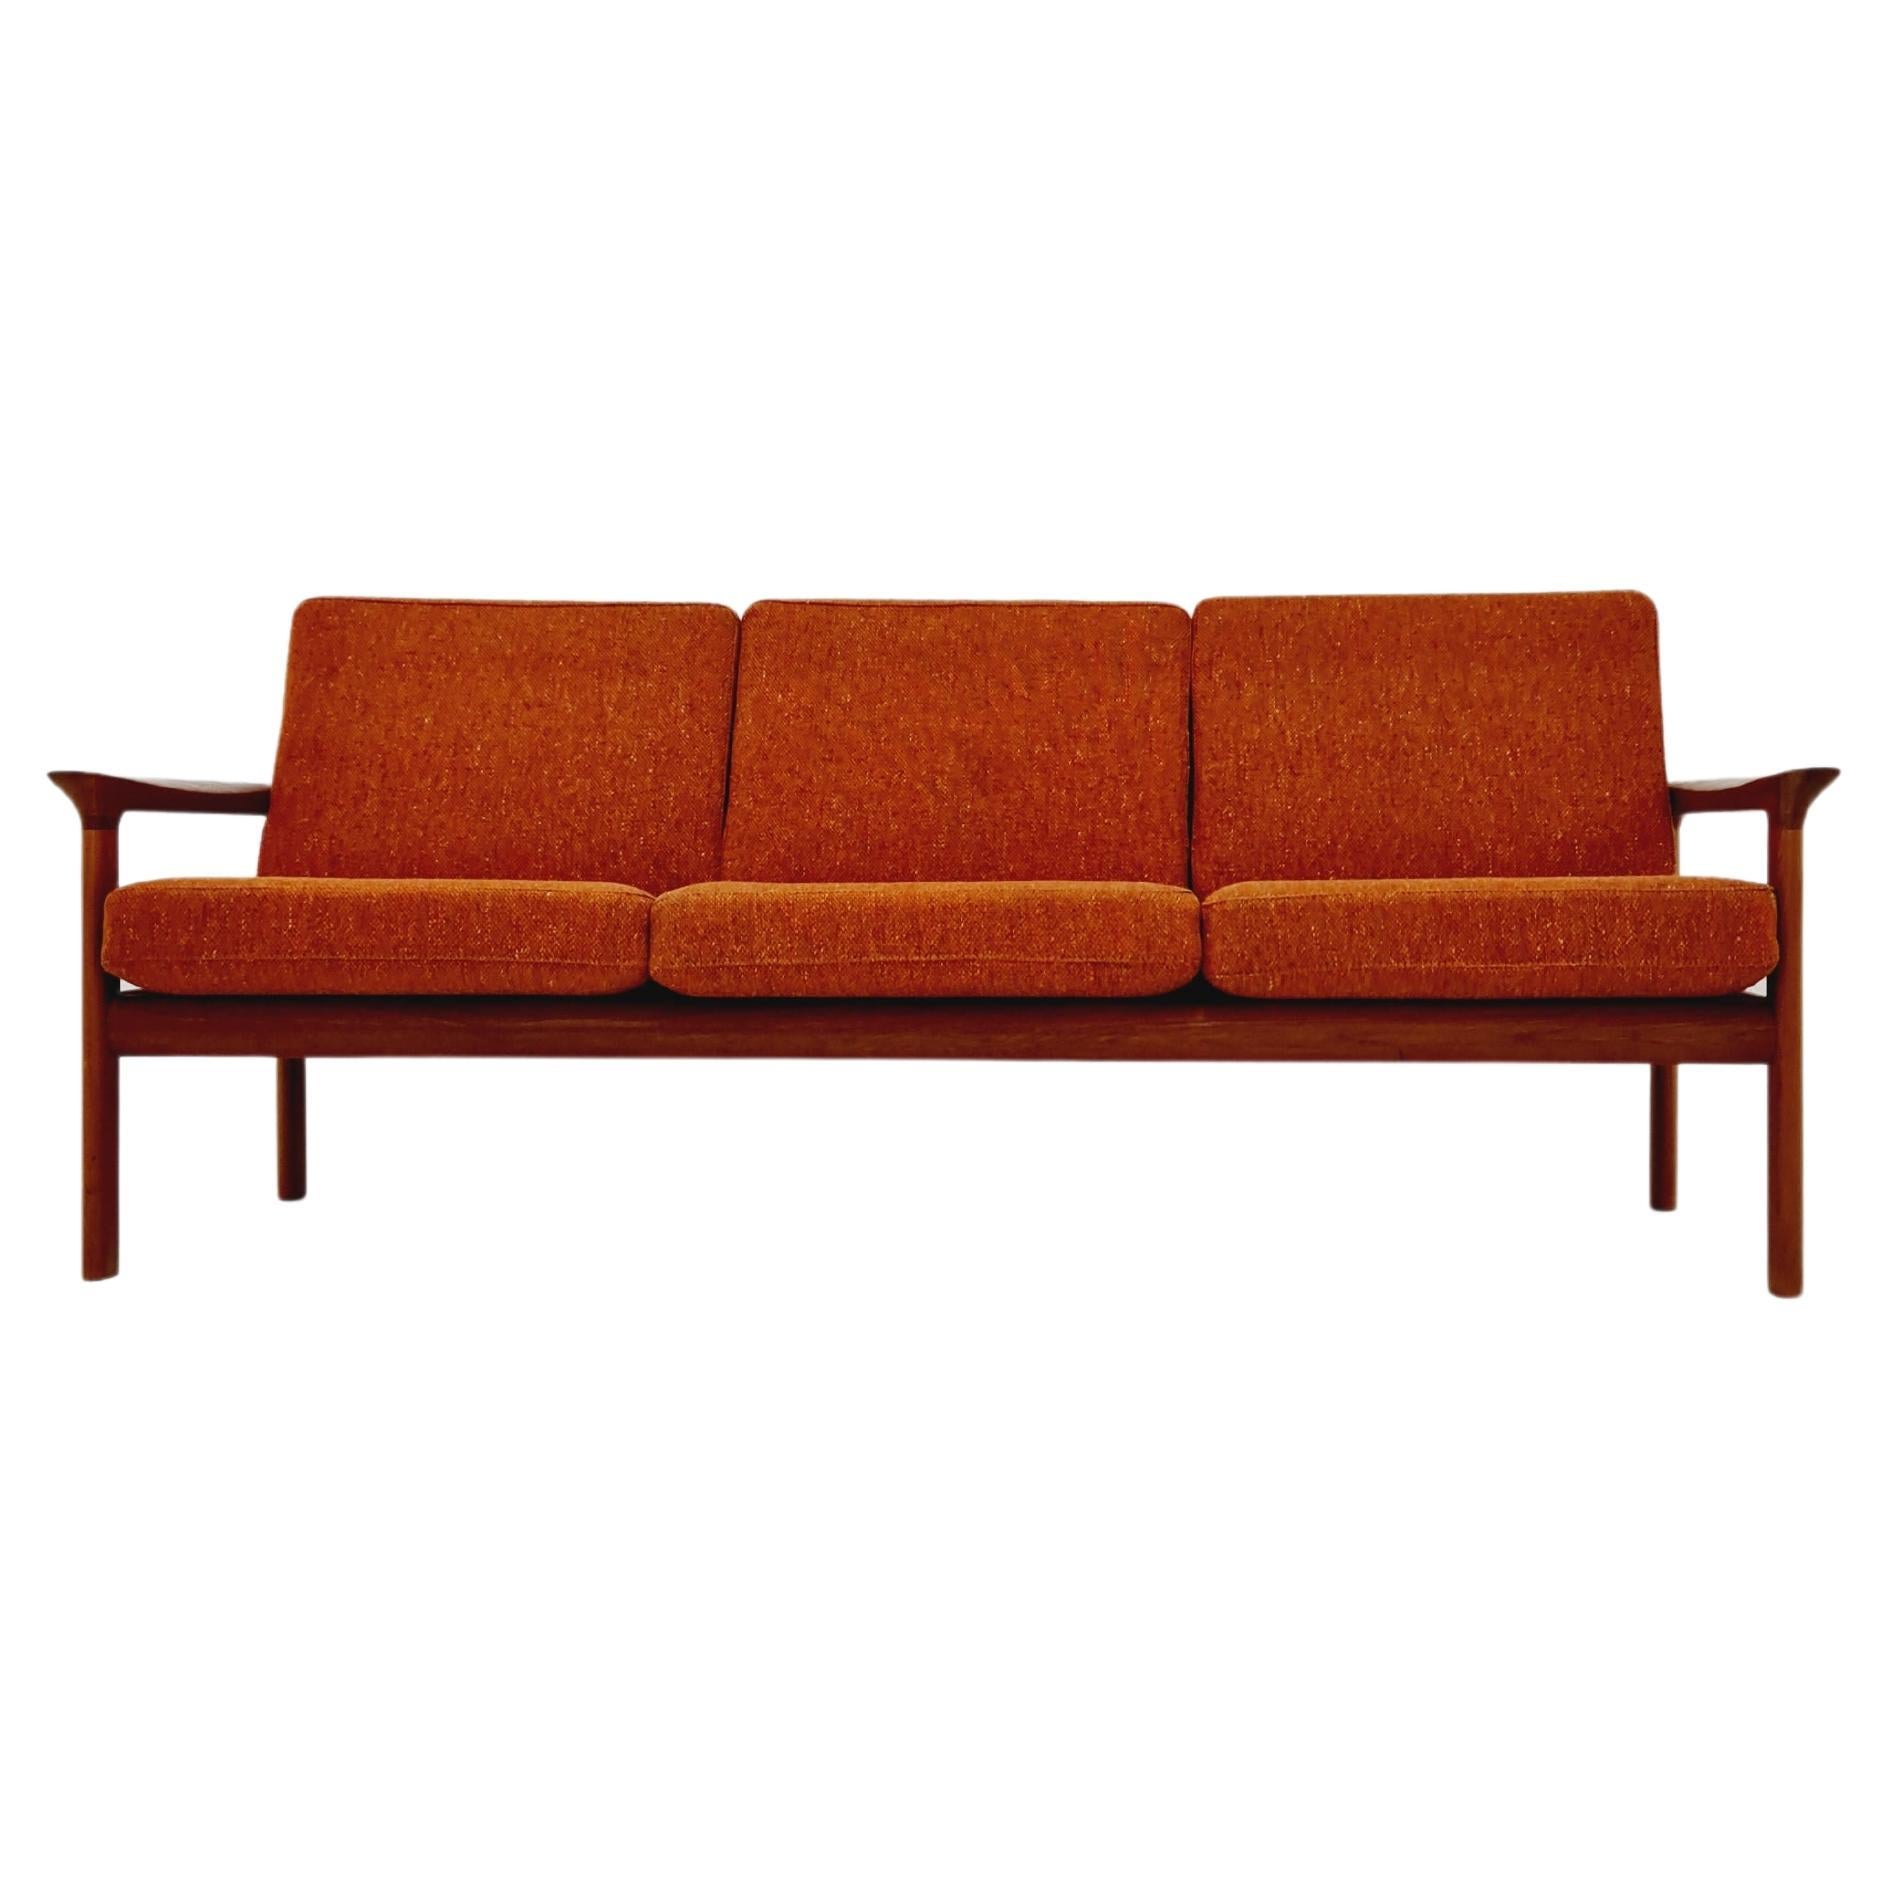 Mid century easy lounge couch by Sven ellekaer for komfort teak 